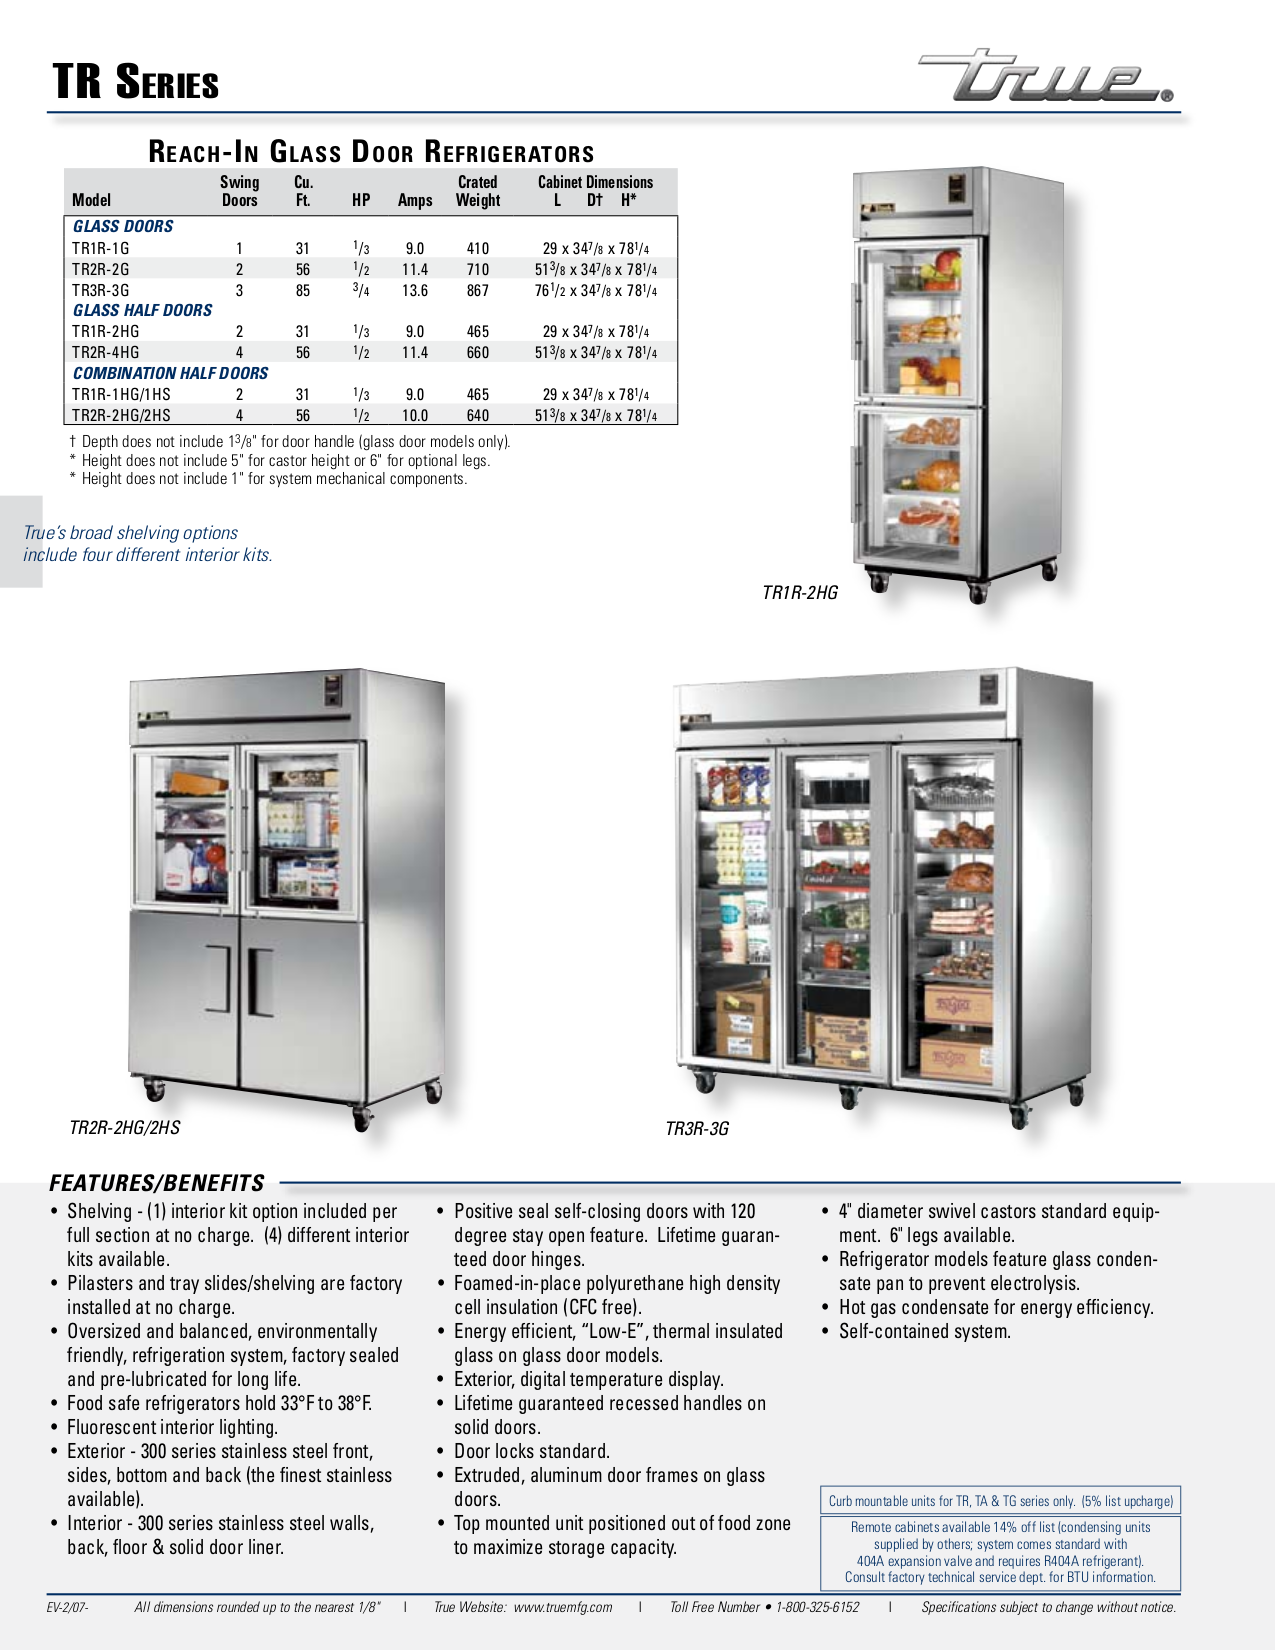 pdf for True Refrigerator TR2R-2G manual